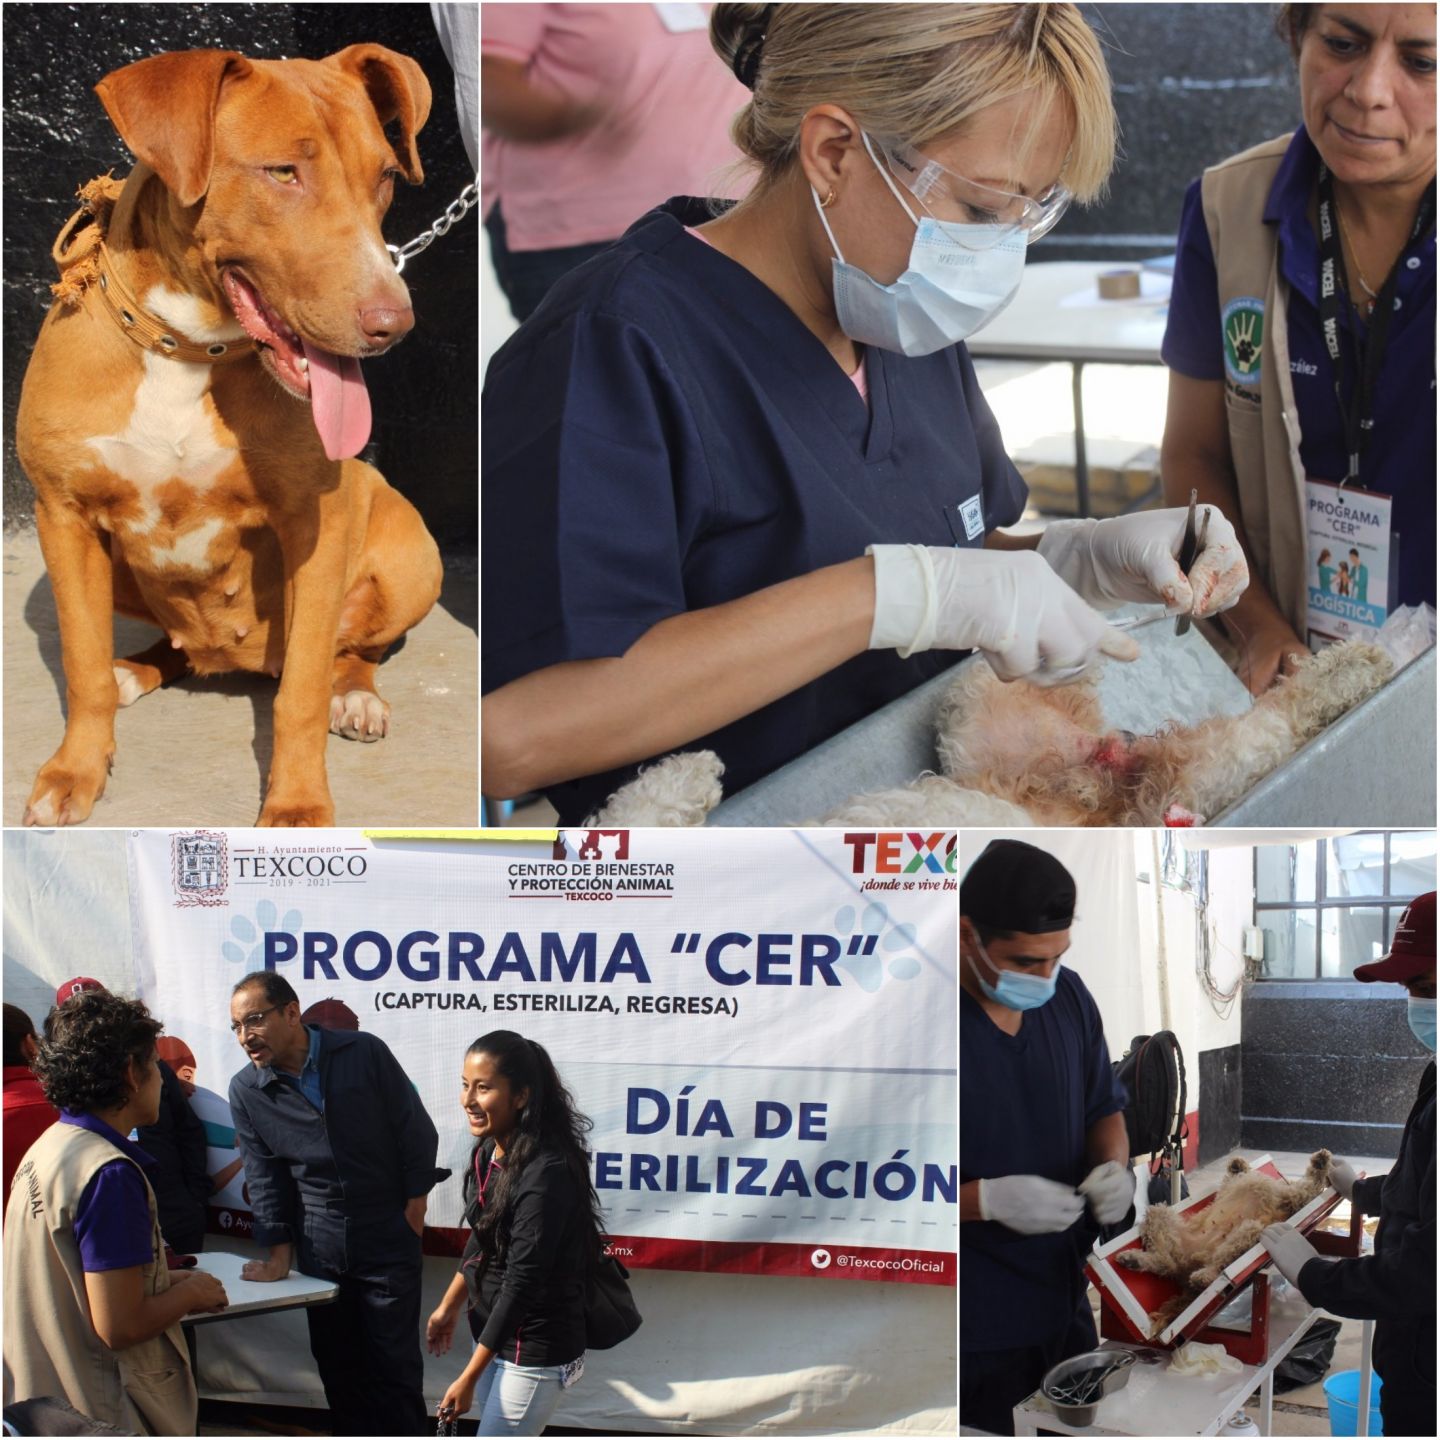 Evento "Huellitas de amor" esterilizará 300 mascotas en Texcoco 